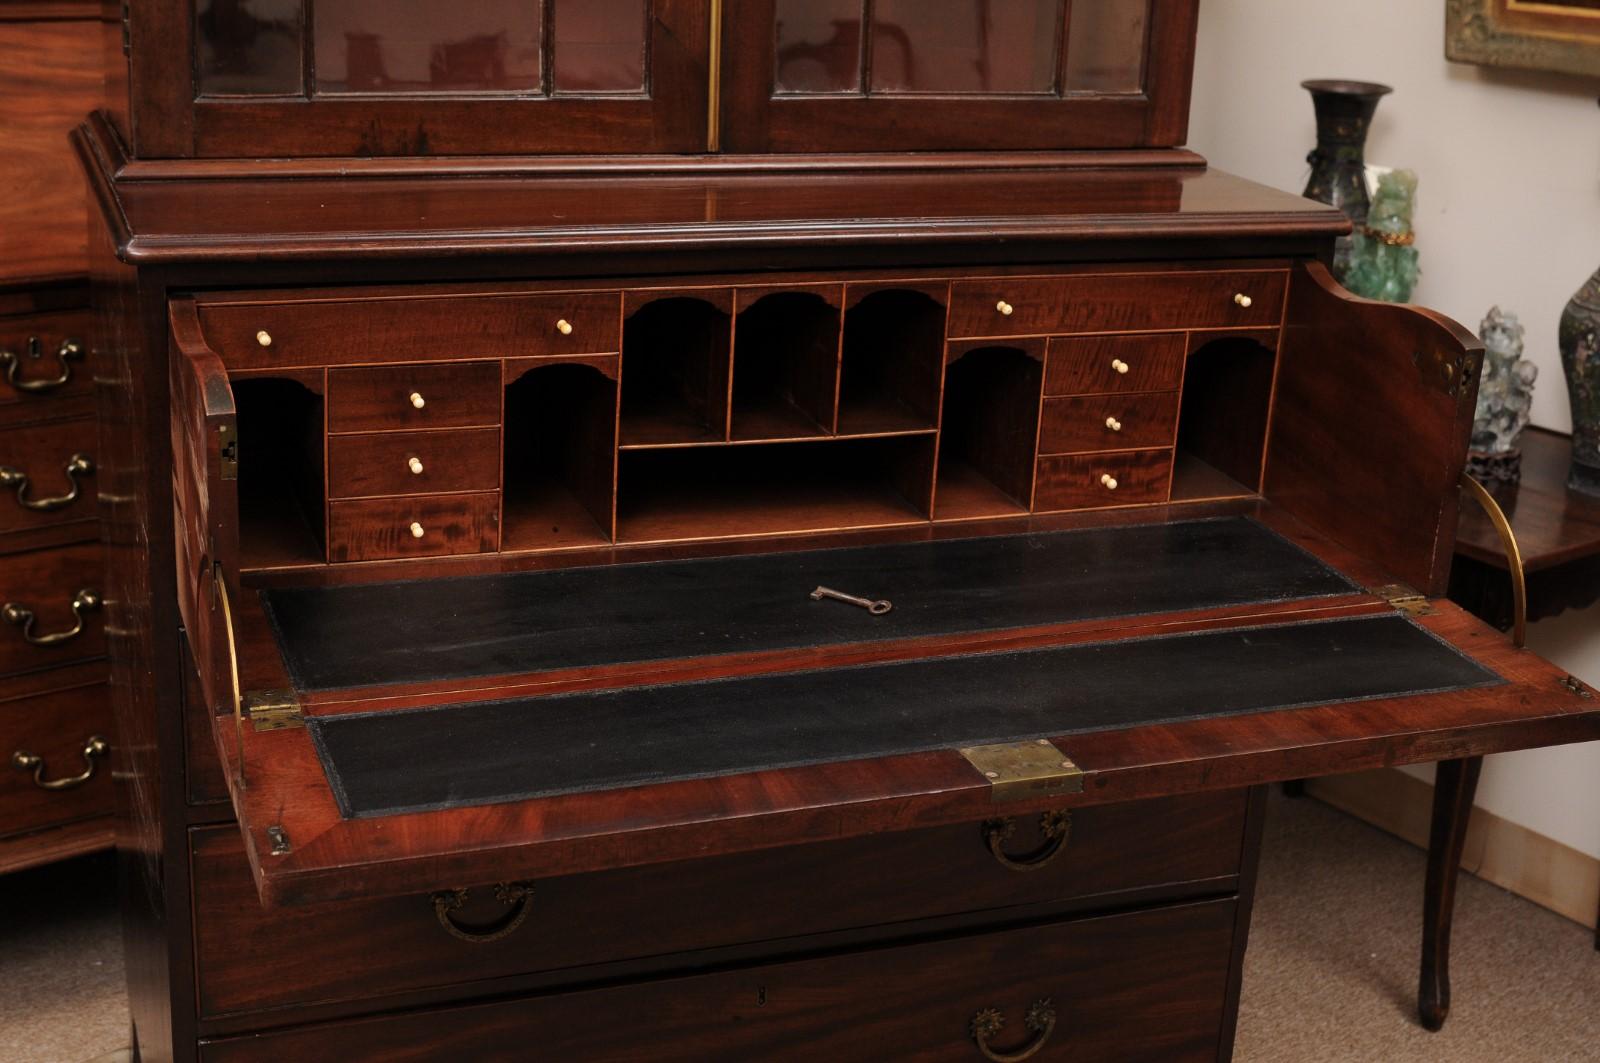  19th Century English Secretary Bookcase in Mahogany with Flat Cornice Top 4